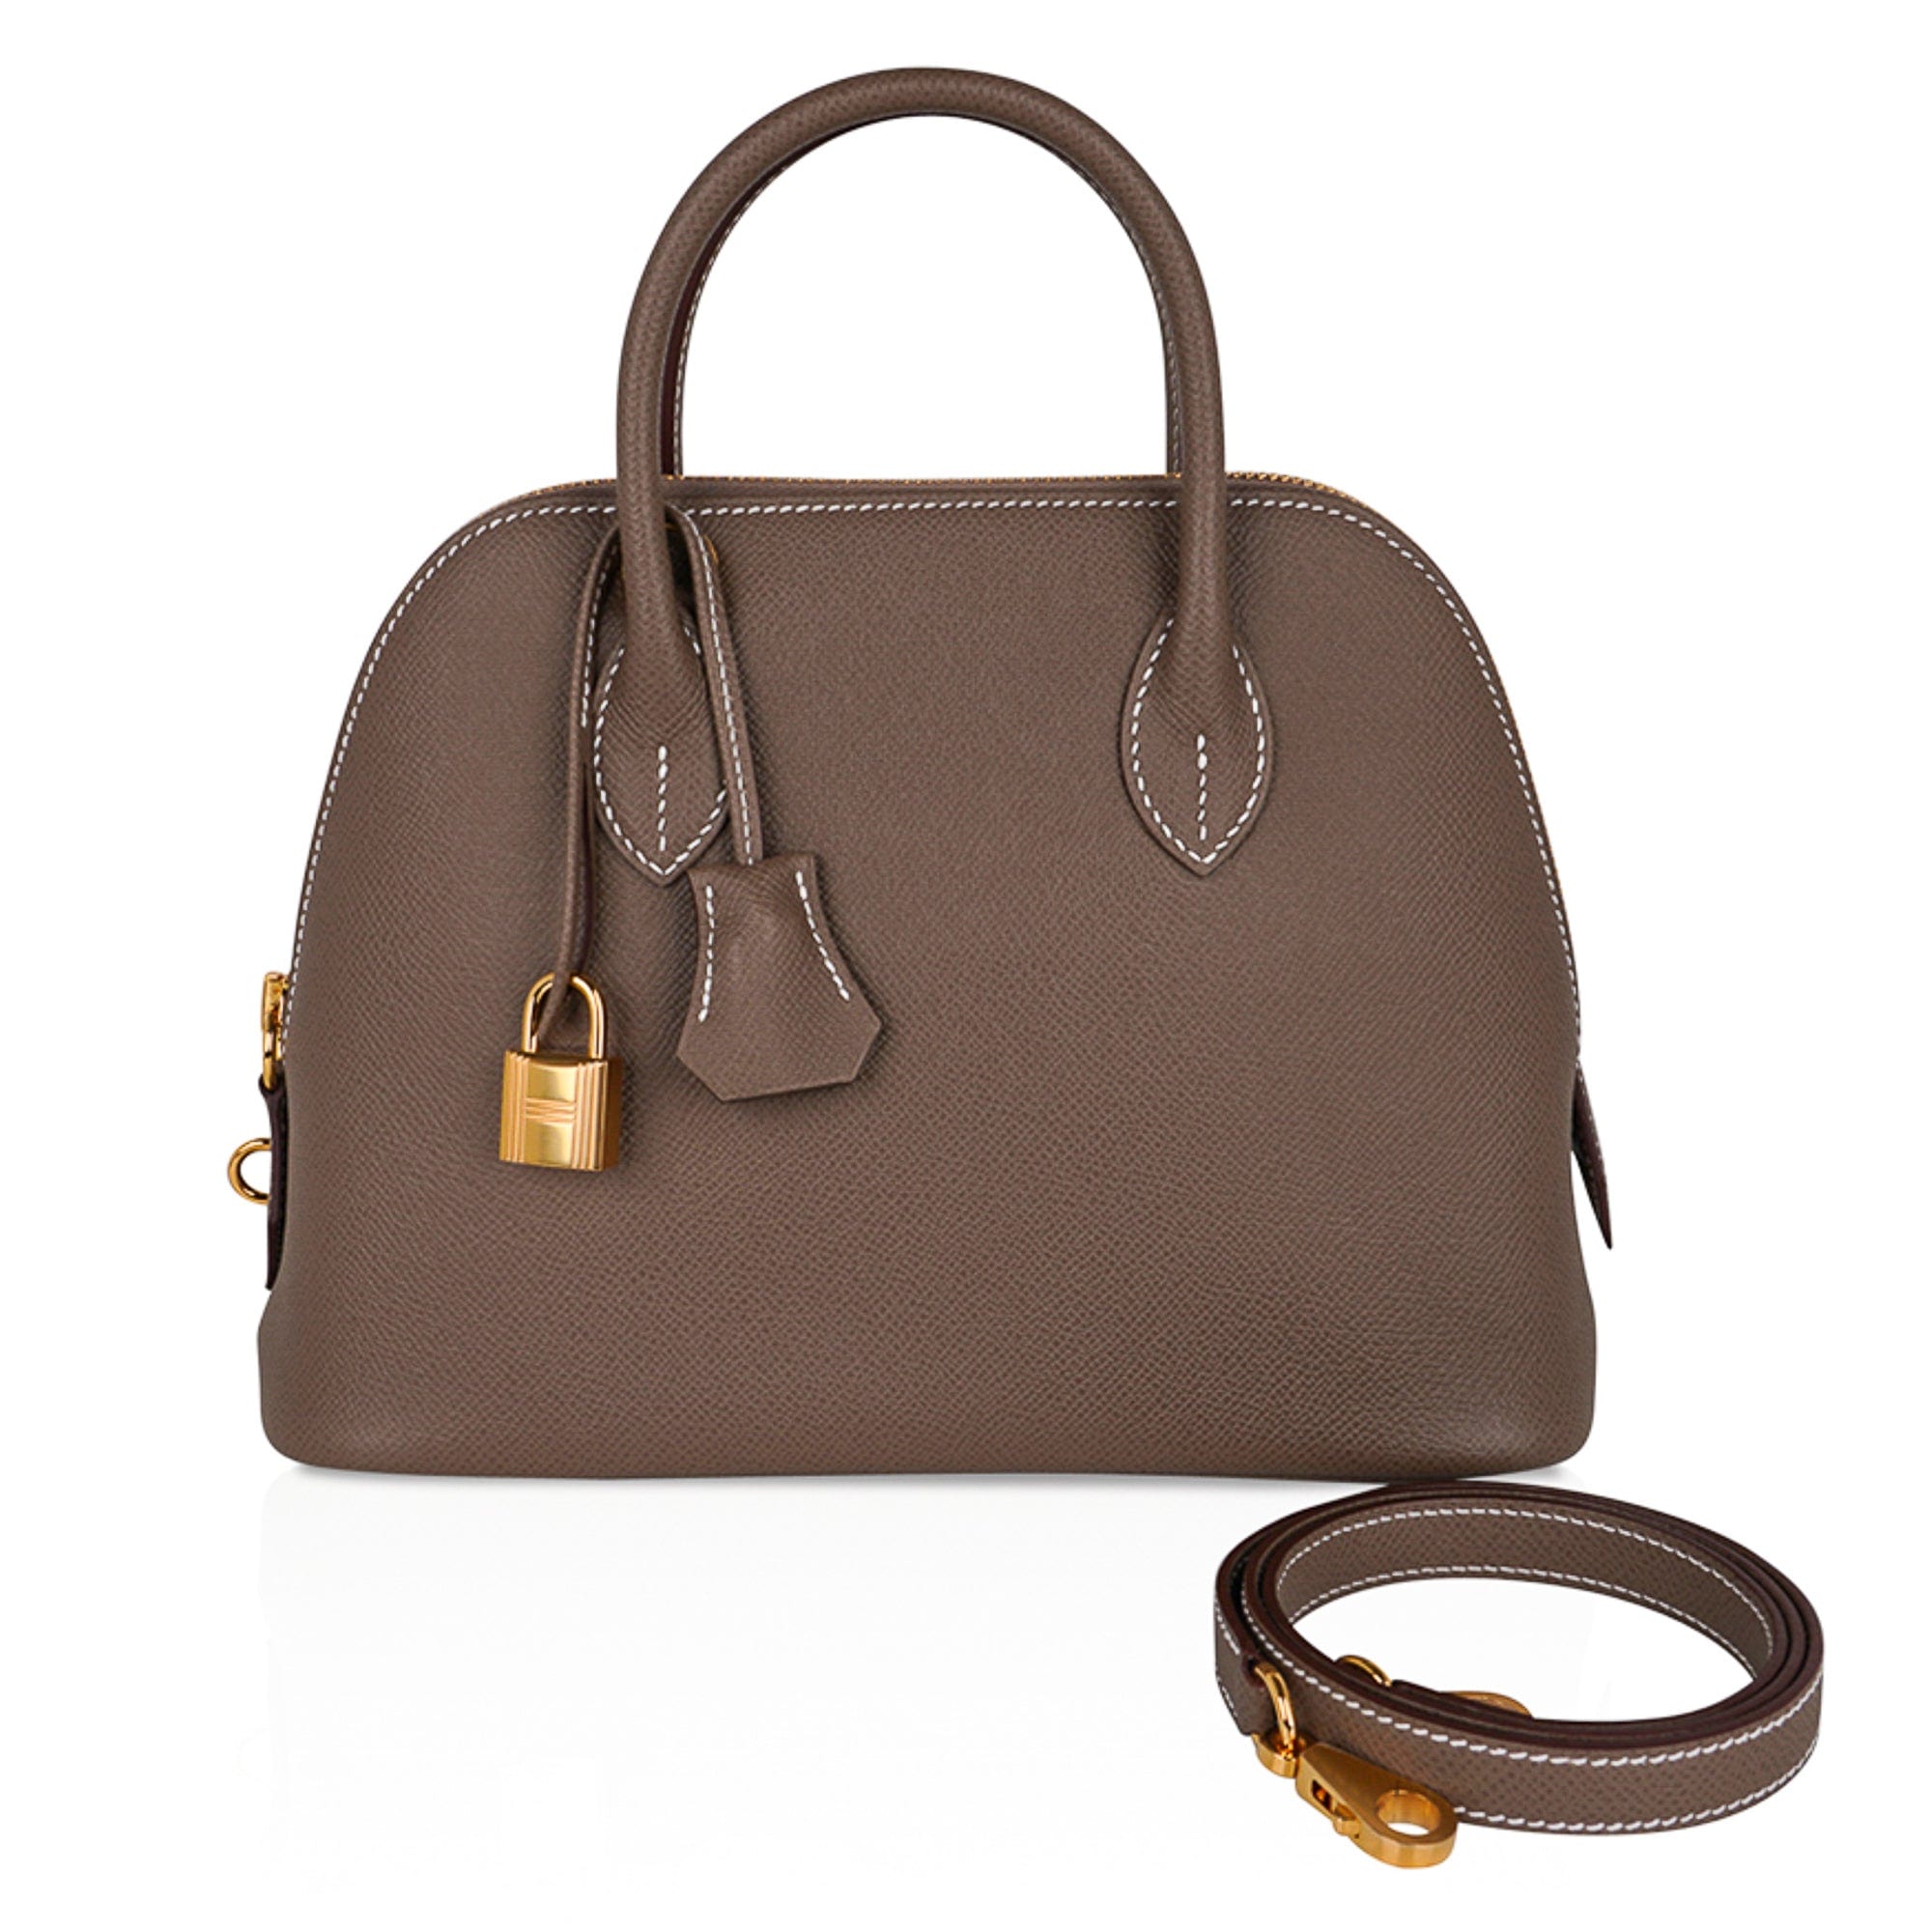 Hermès 2021 Epsom 1923 Bolide 25 - Pink Handle Bags, Handbags